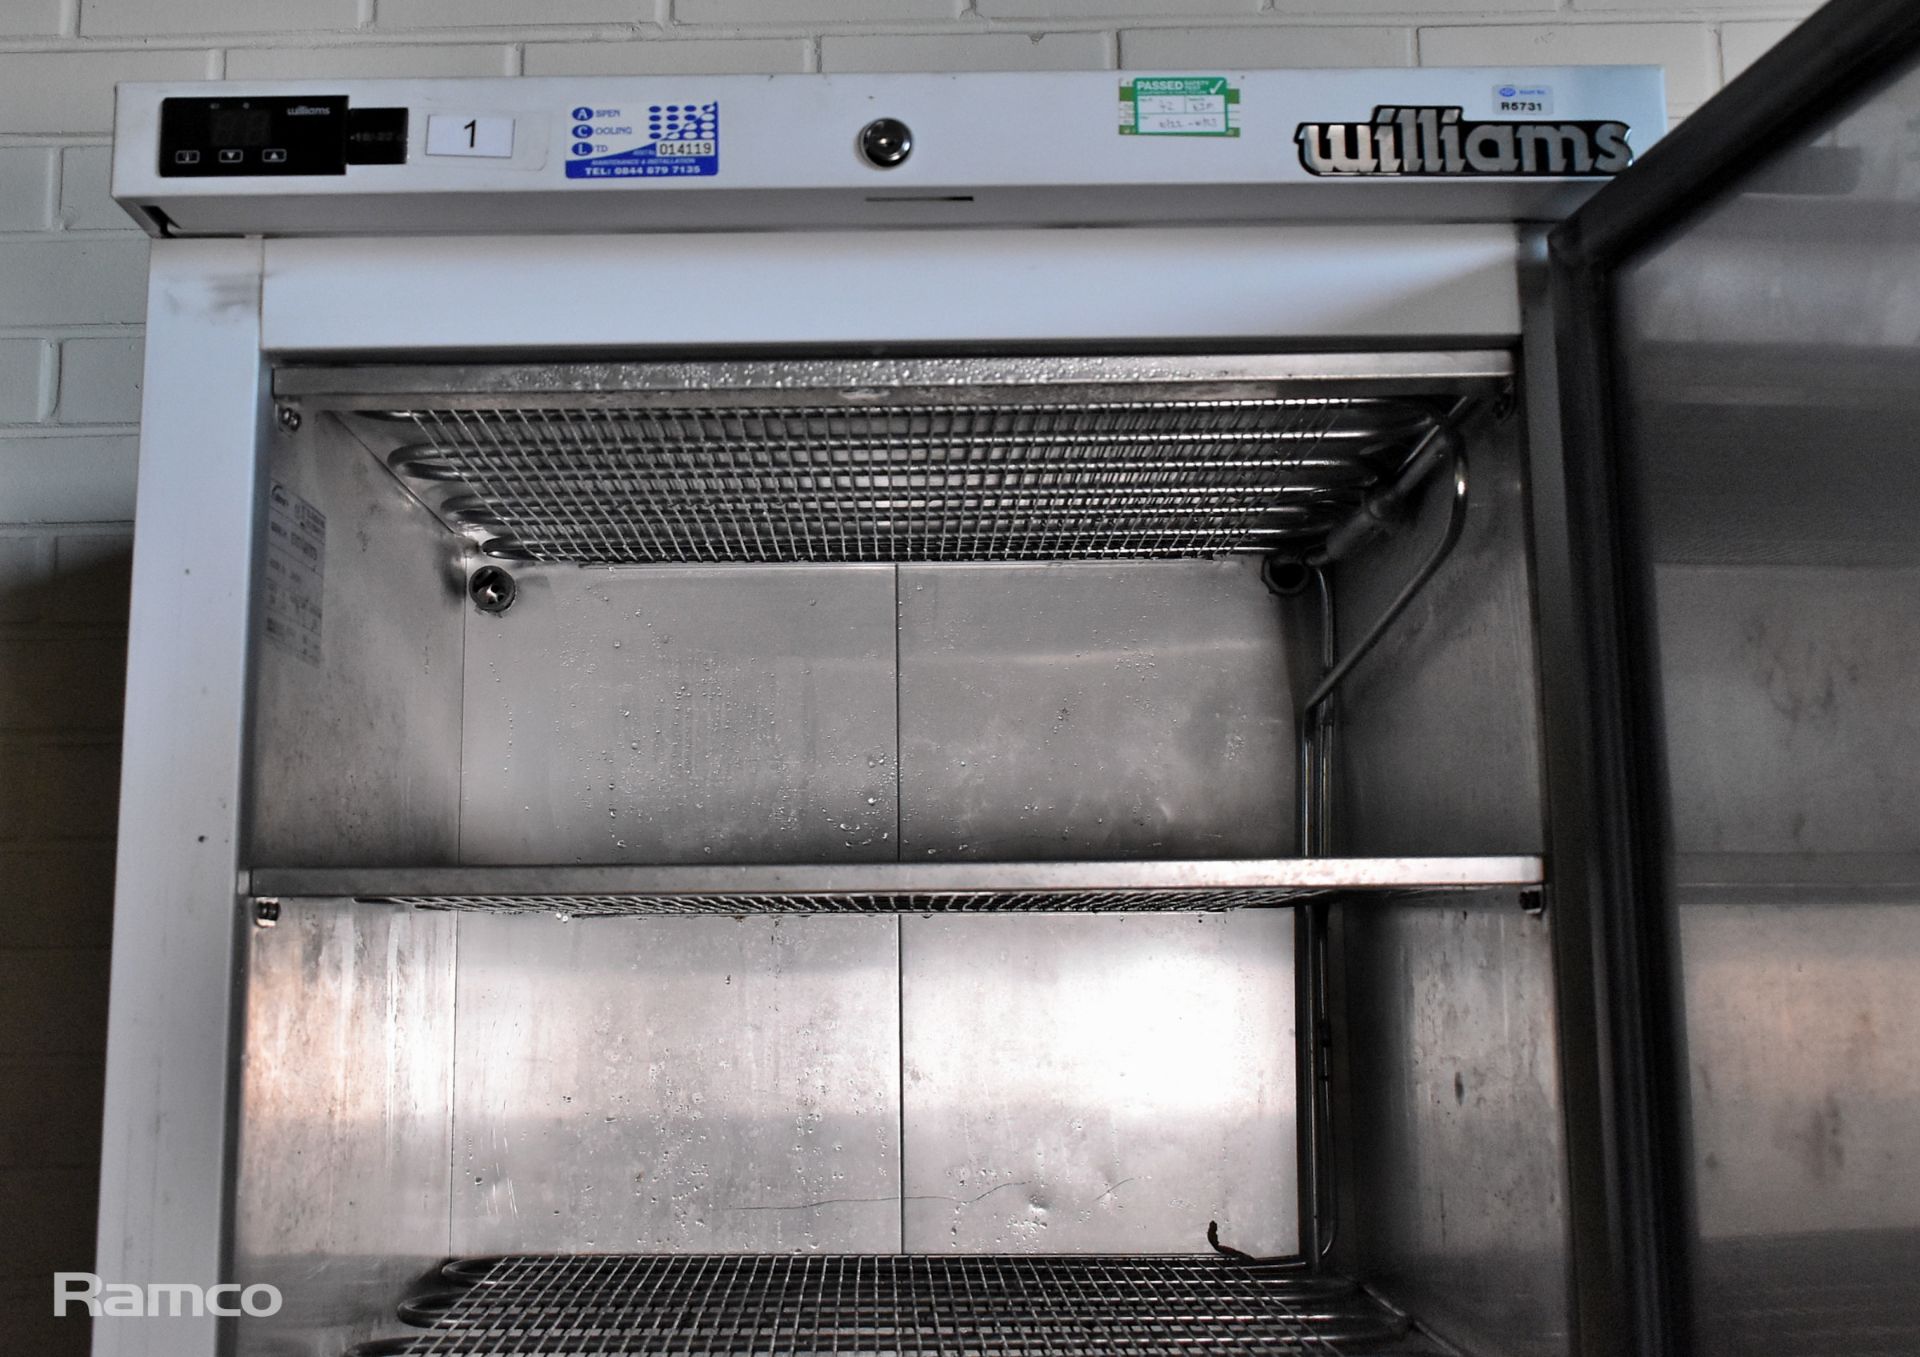 Williams LA400WA single door upright freezer - white - W 640 x D 650 x H 1765mm - Image 4 of 7